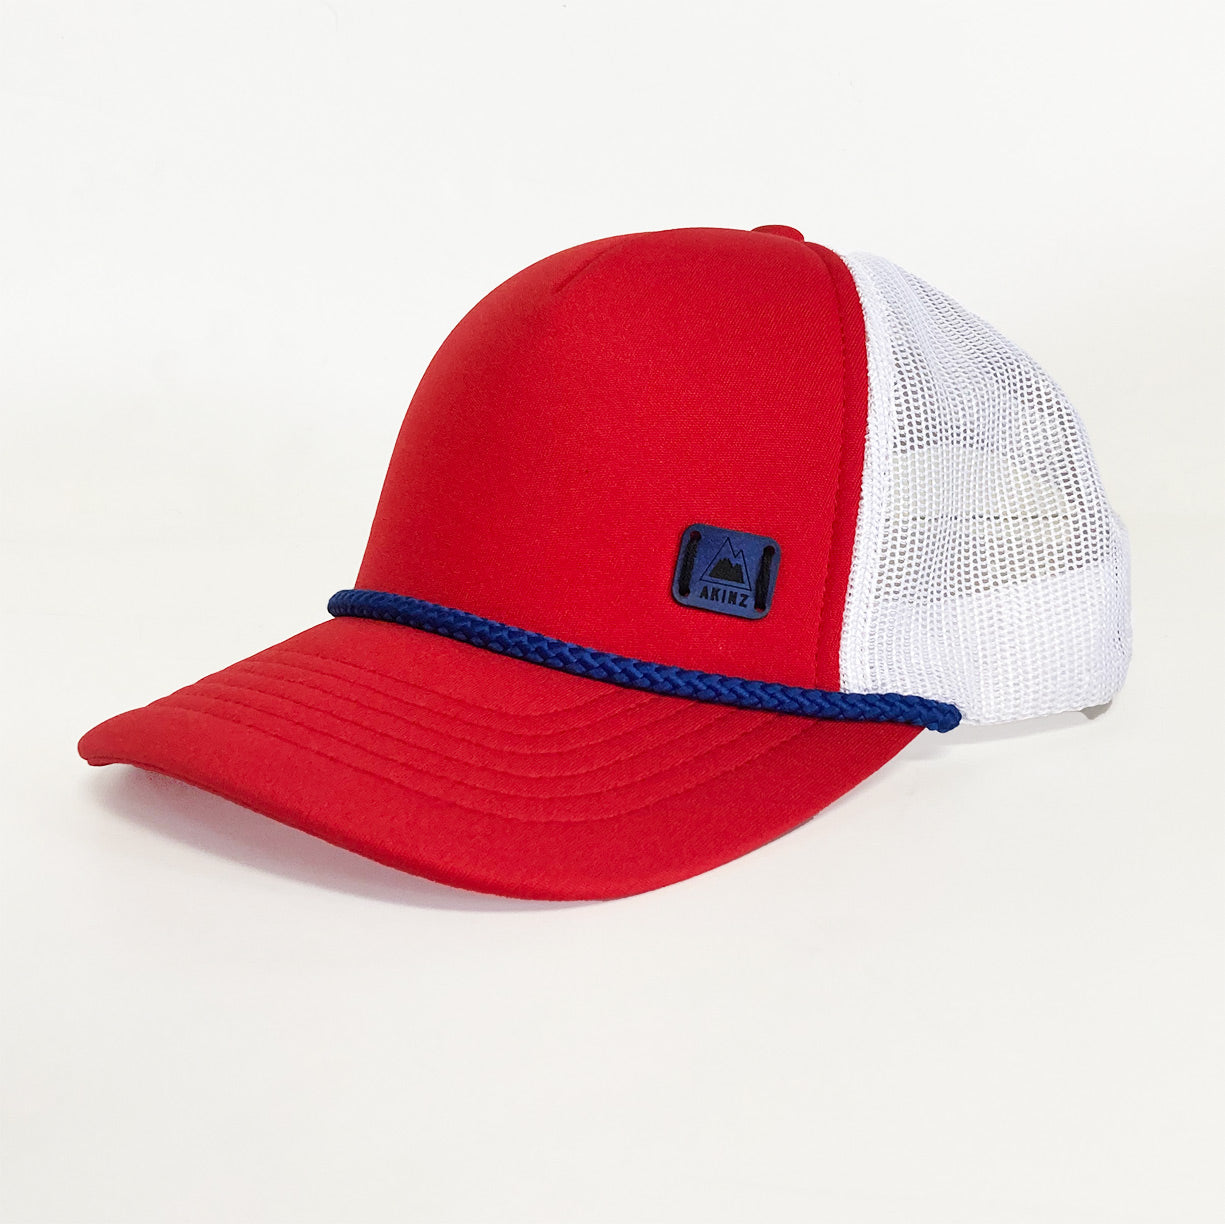 mountain-summit-trucker-hat-red-white-blue-side.jpg